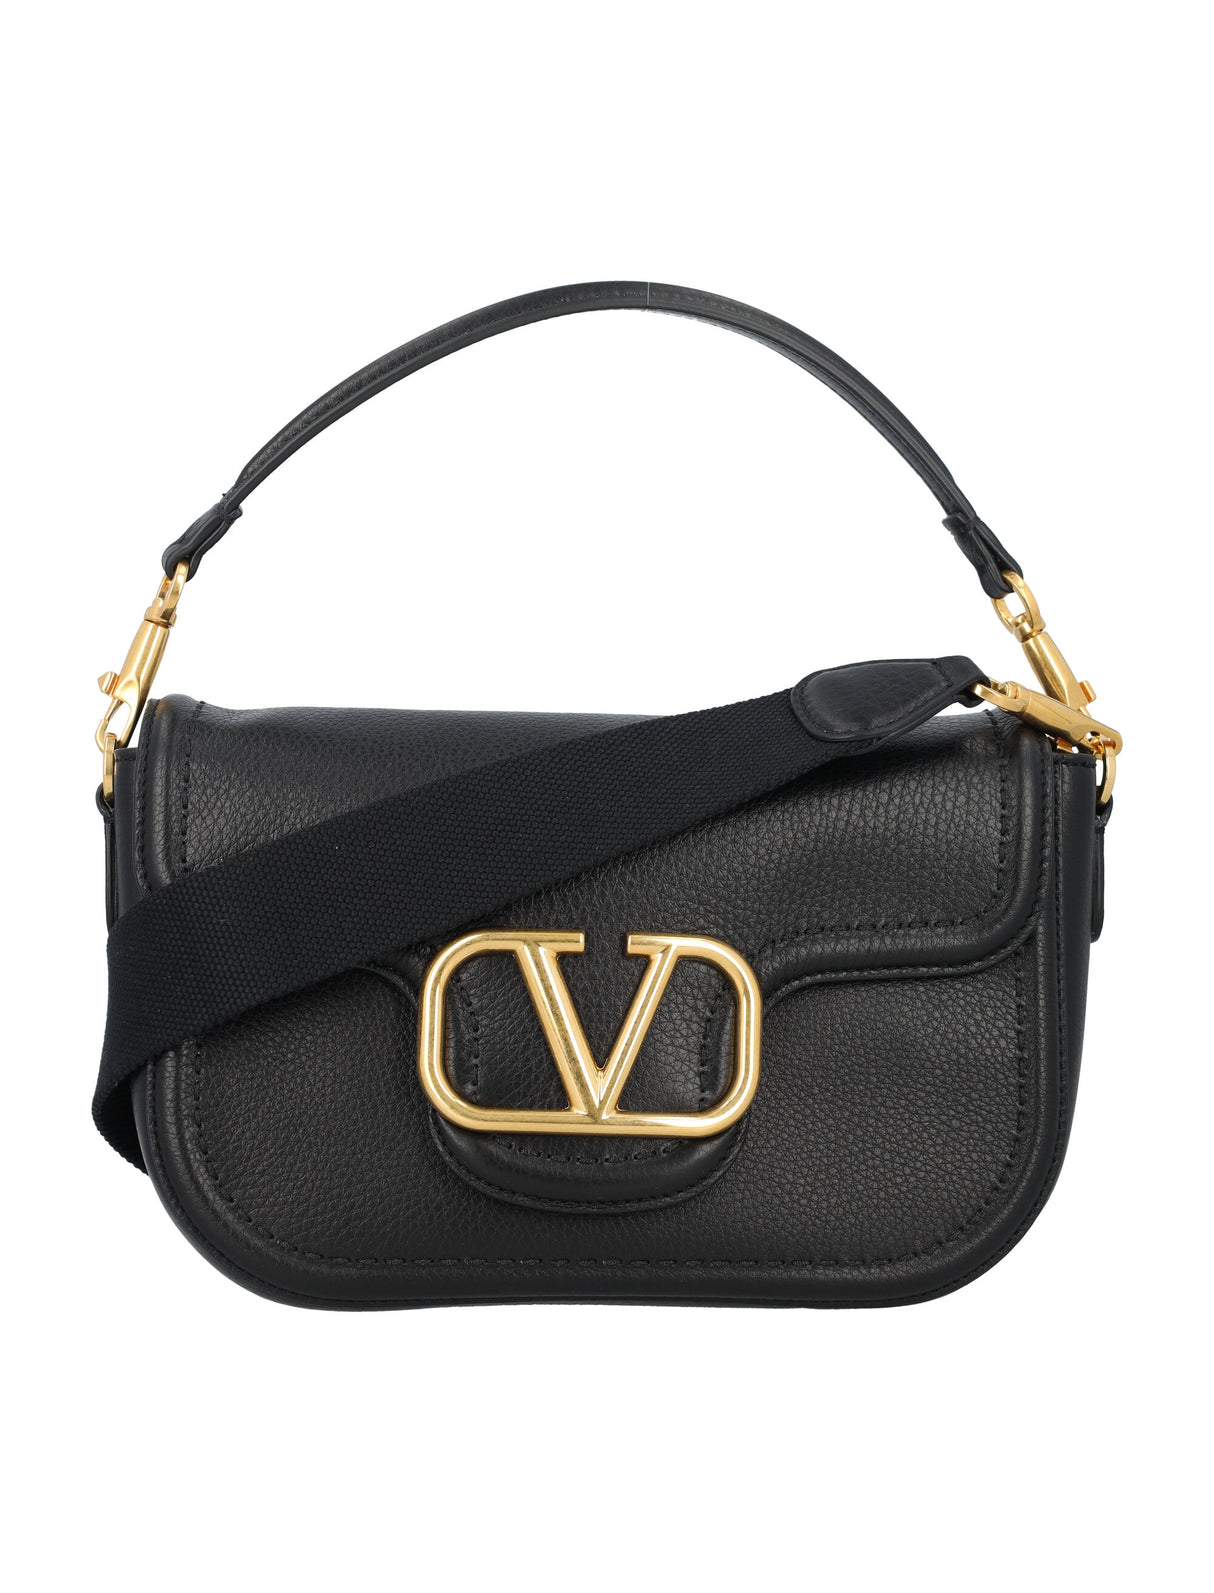 Black Leather Foldover Shoulder Handbag for Women with Metallic VLogo Signature